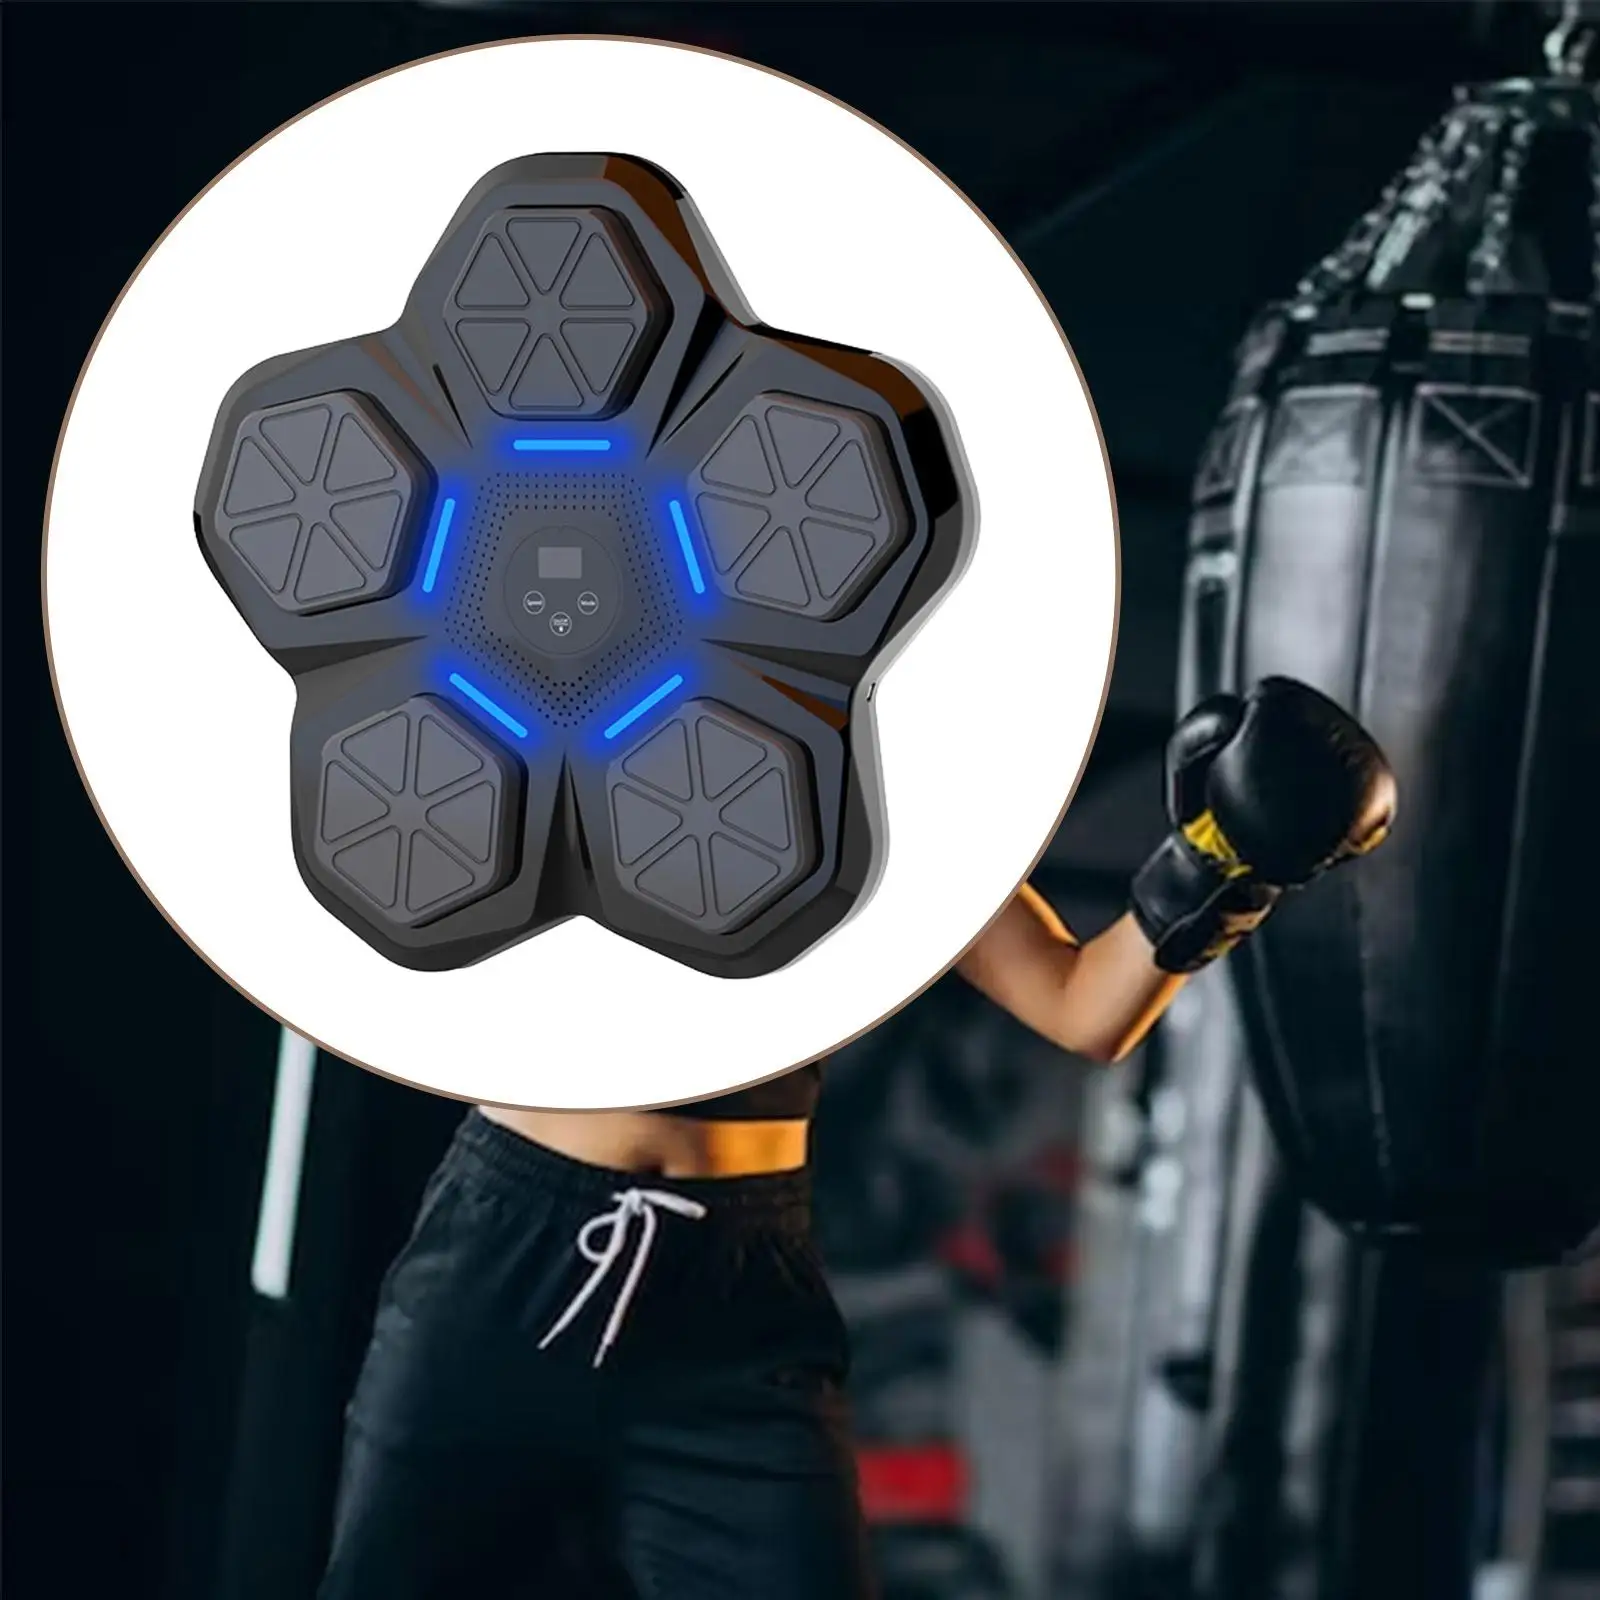 Boxing Machine Electronic Boxing Wall Target Reaction Training Target for Sanda Martial Arts Kickboxing Improves Perception